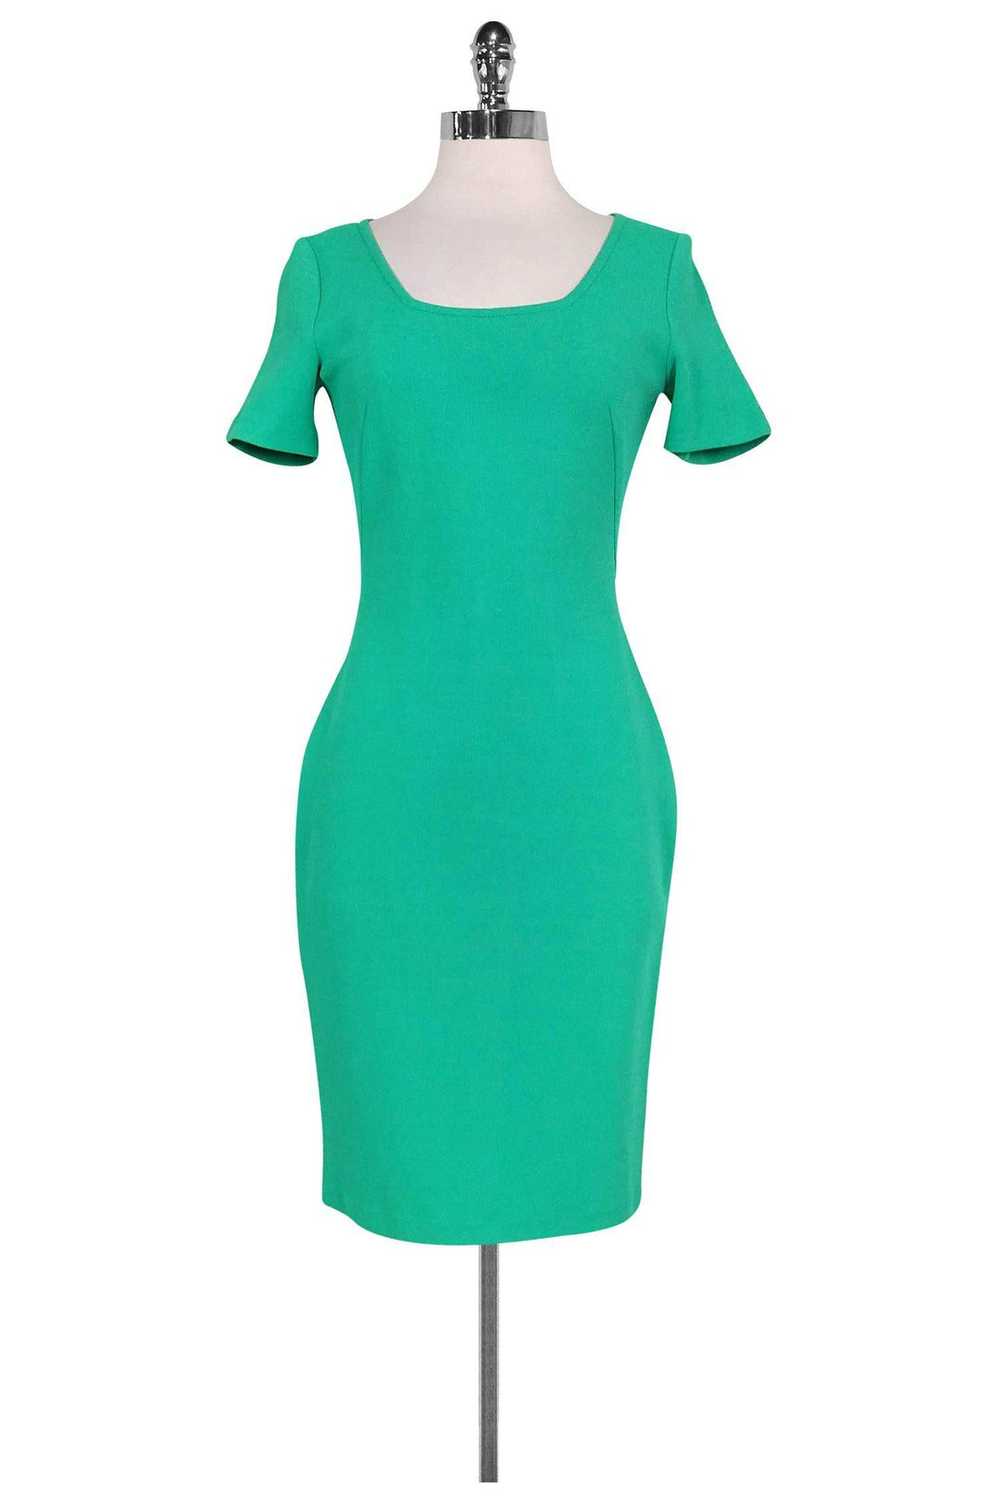 St. John - Seafoam Green Fitted Dress Sz 4 - image 1